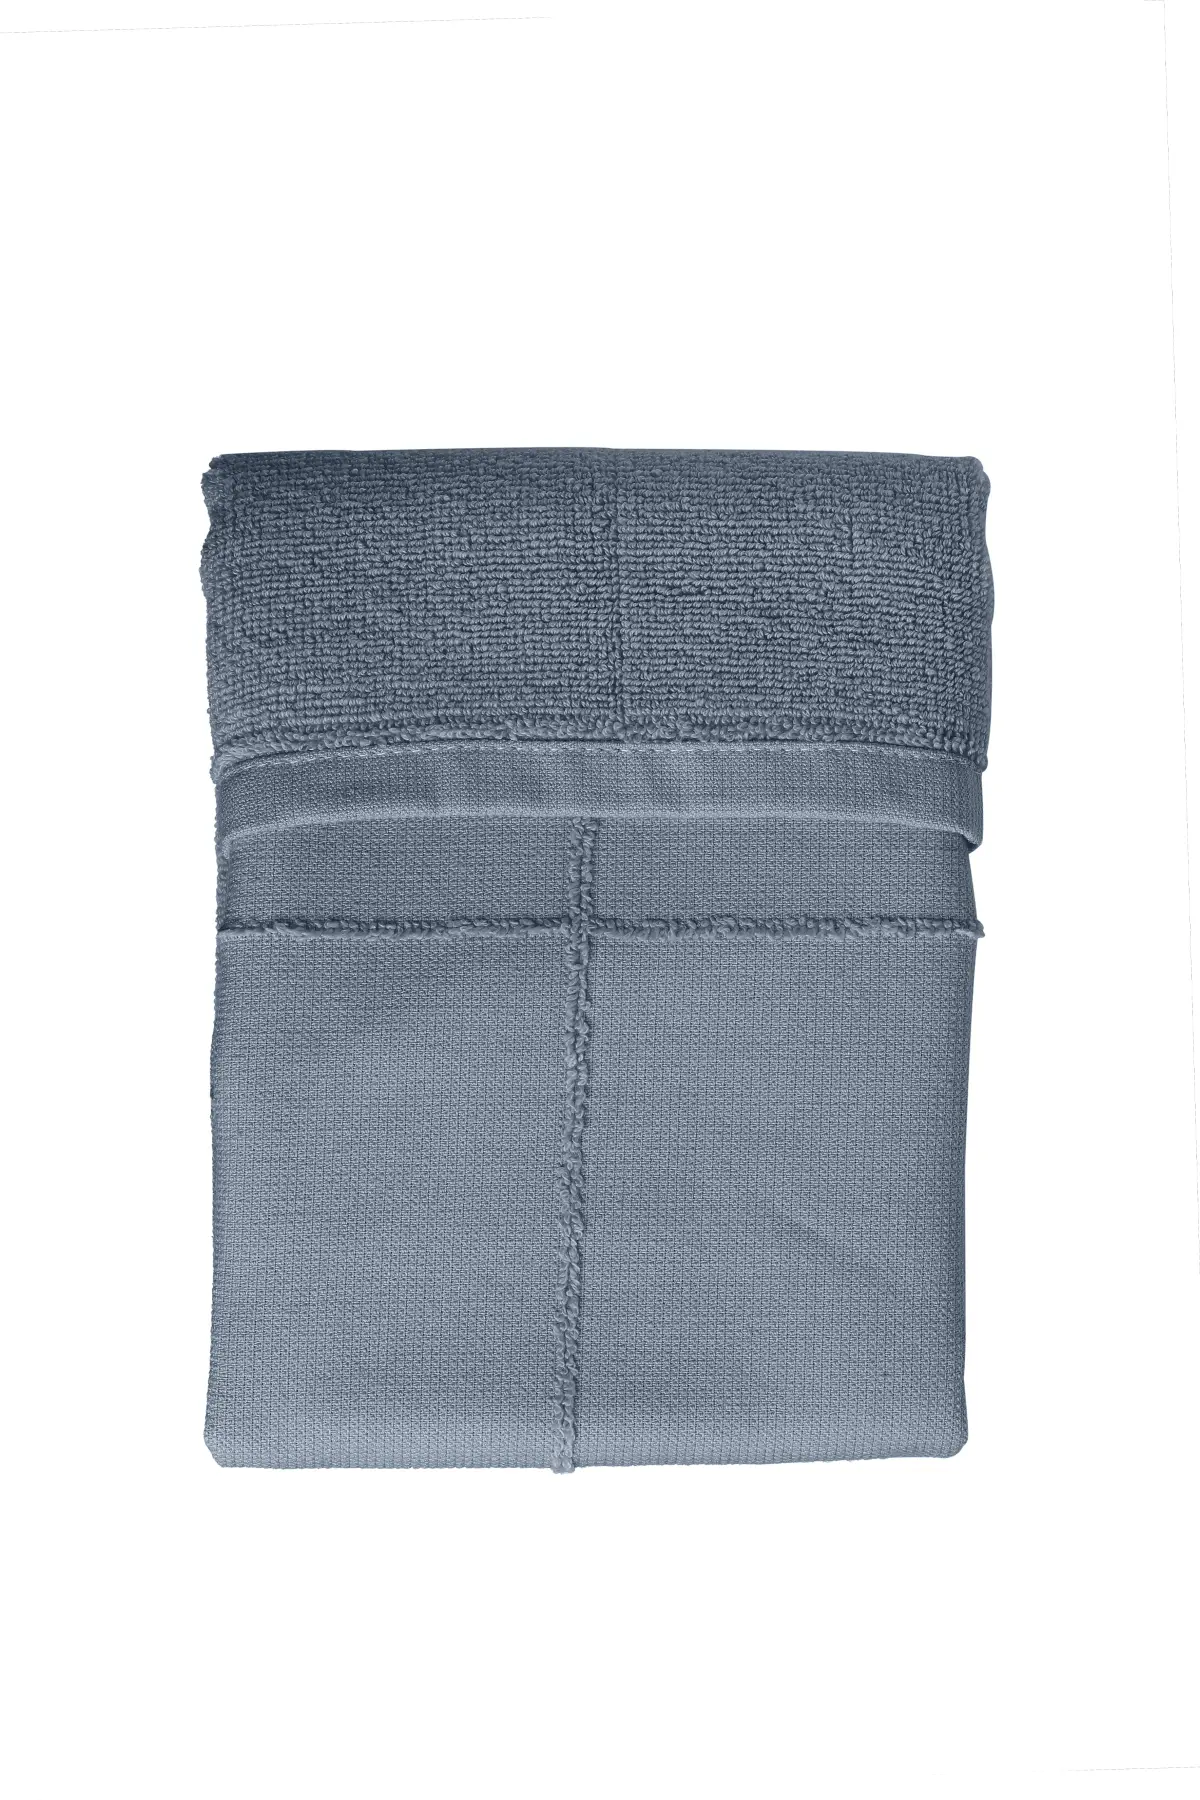 https://roberta-thestore.com/wp-content/uploads/The-Organic-Company-Calm-Hand-Towel-grey-blue-1.jpg.webp